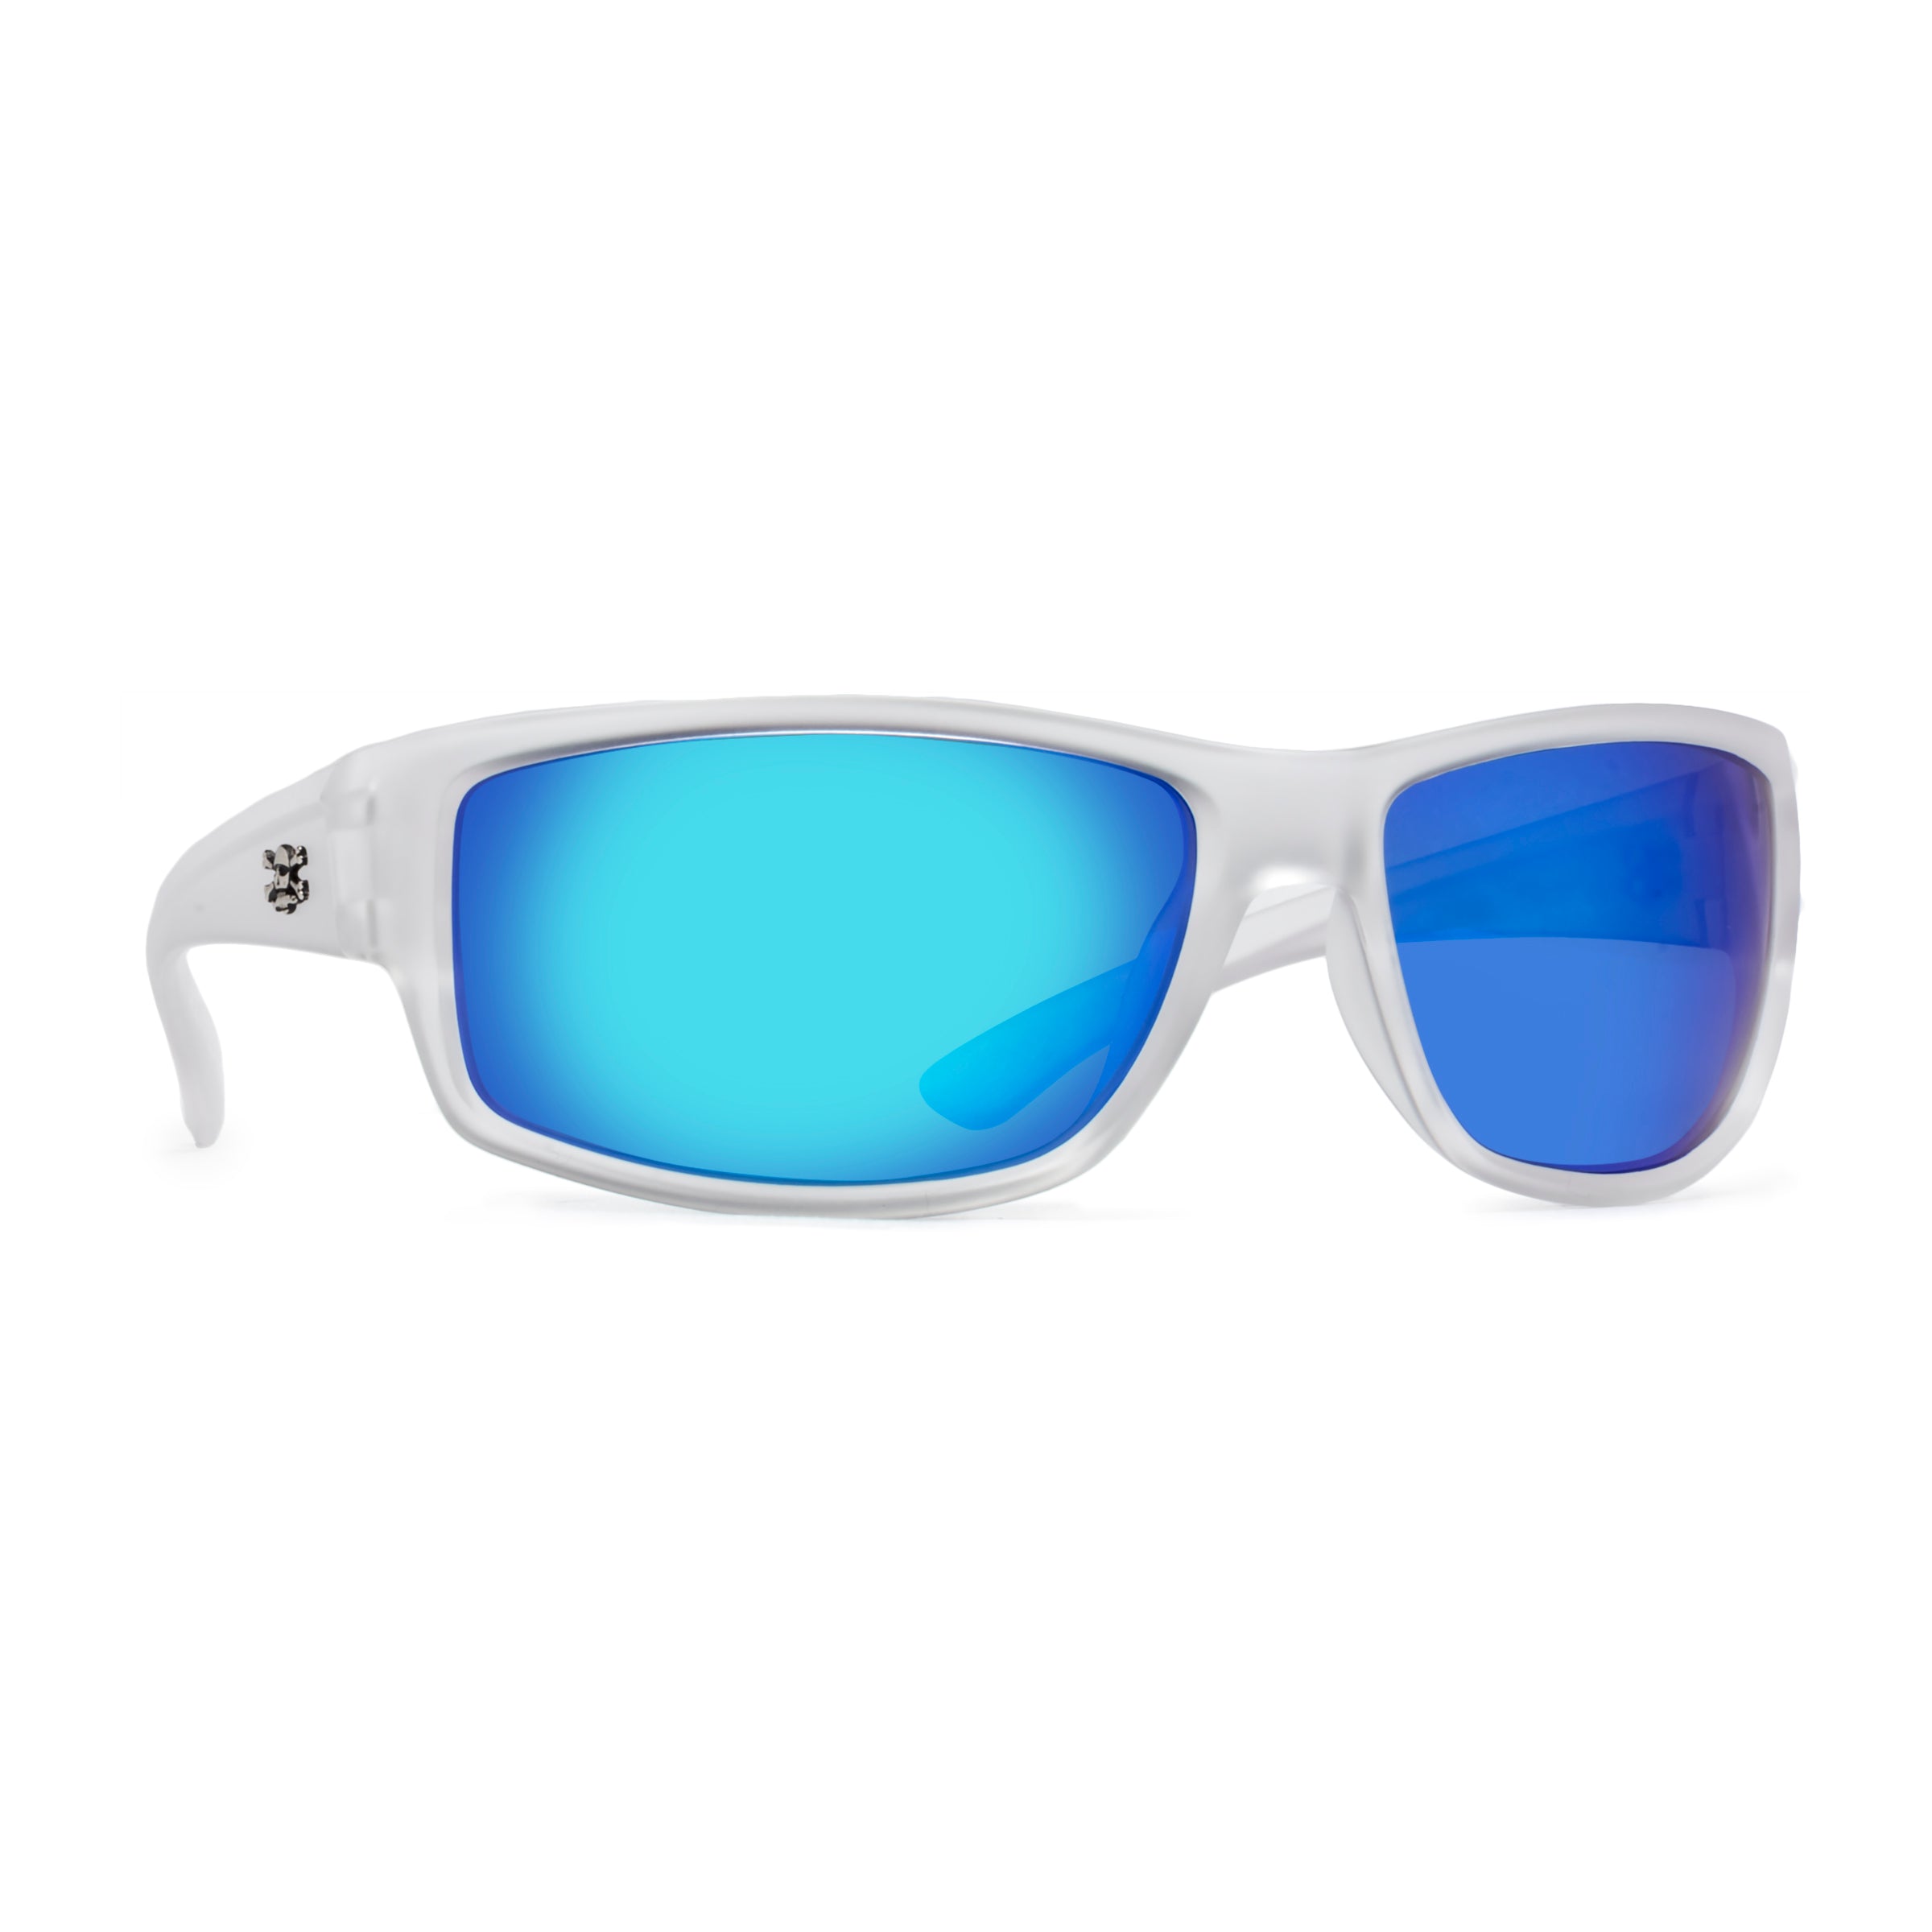 Calcutta Arena Polarized Sunglasses Matte Black Frame/Blue Mirror Lens